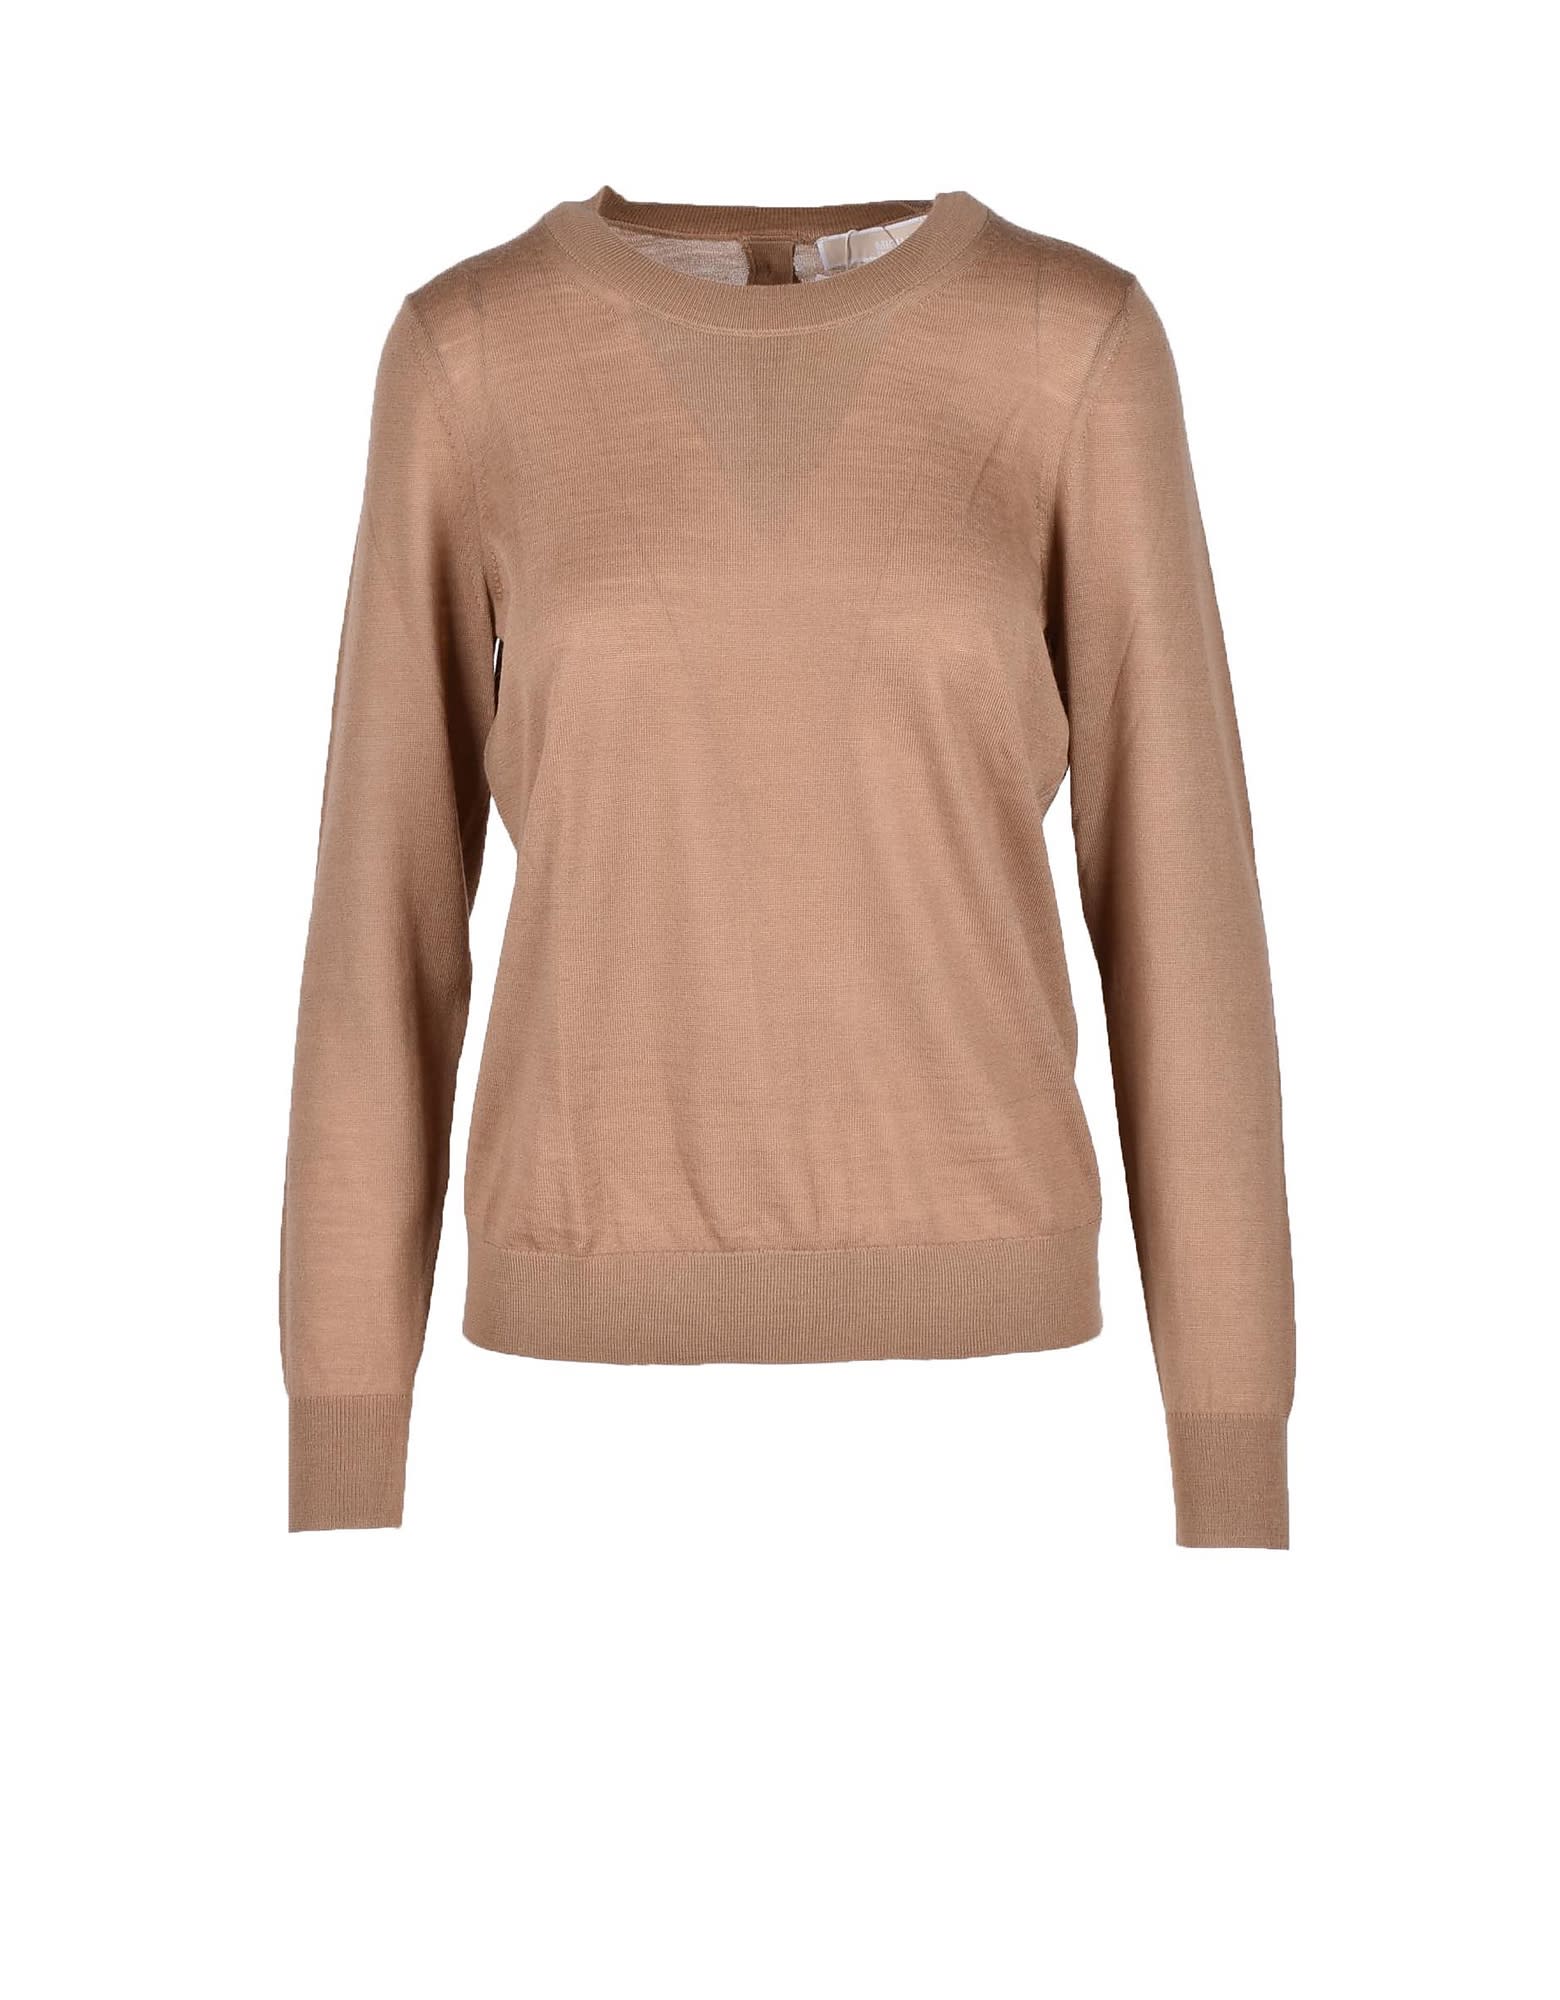 Michael Kors Womens Camel Sweater